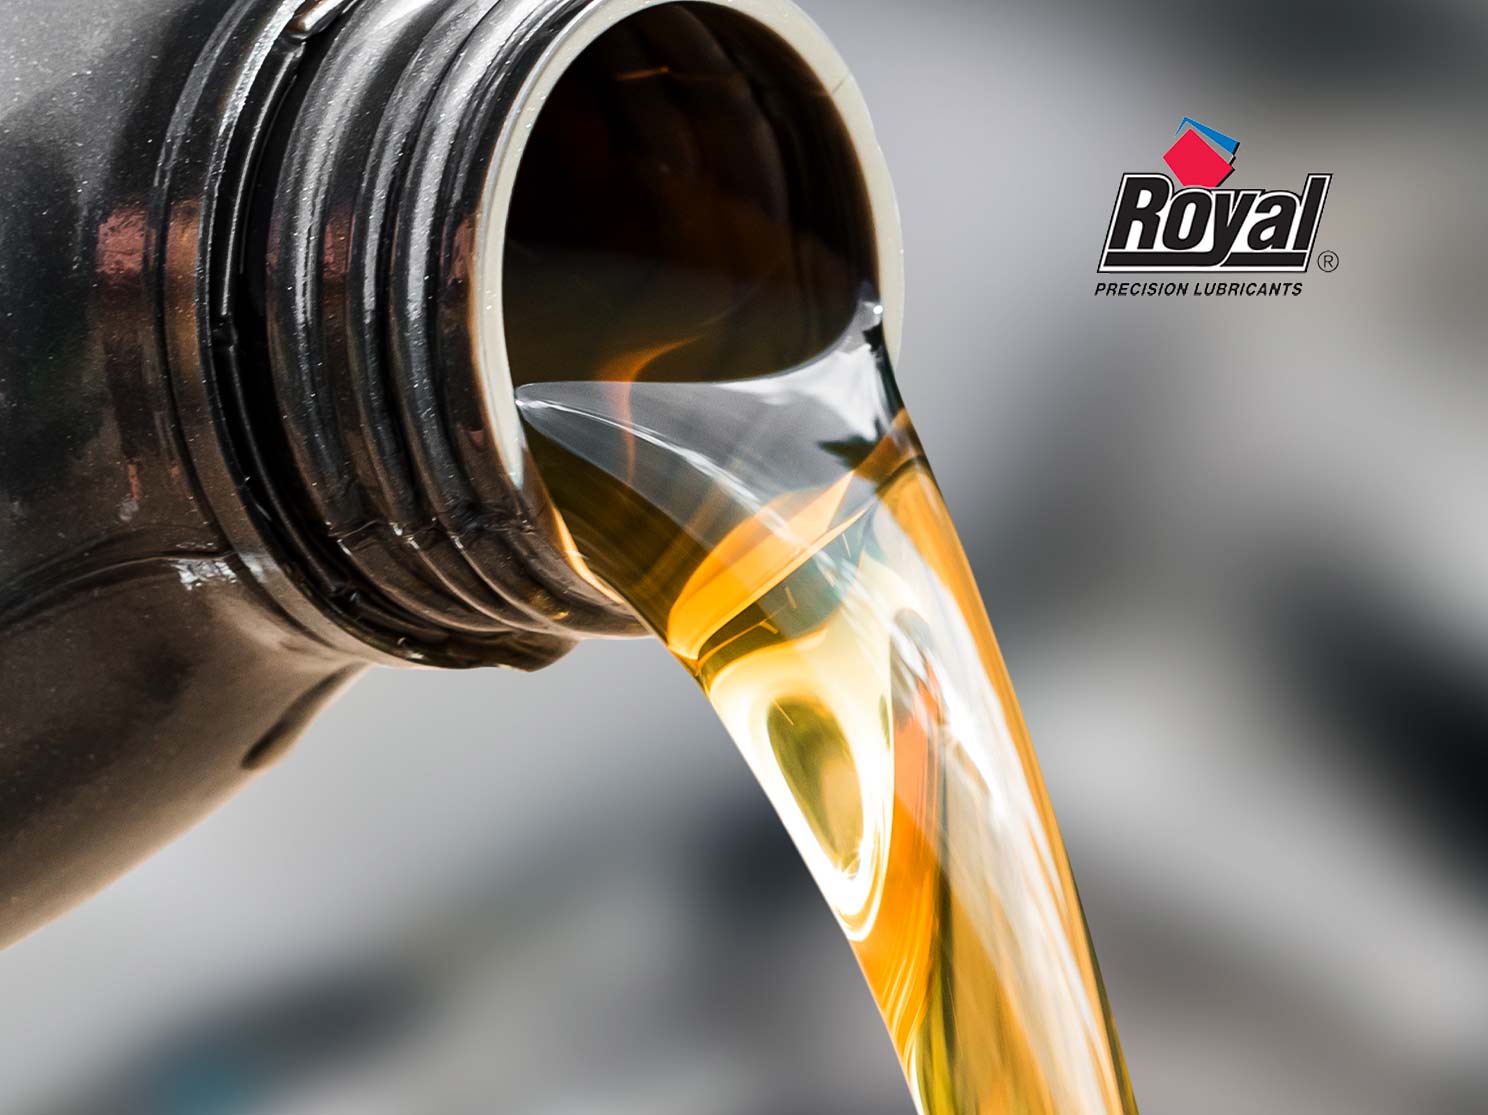 Buy quality lubricants - Gear, Transmission & Hydraulic, Heavy Duty Diesel Engine Oils & Greases from Peel Bearings Tools & Filters Mandurah Rockingham Peel WA